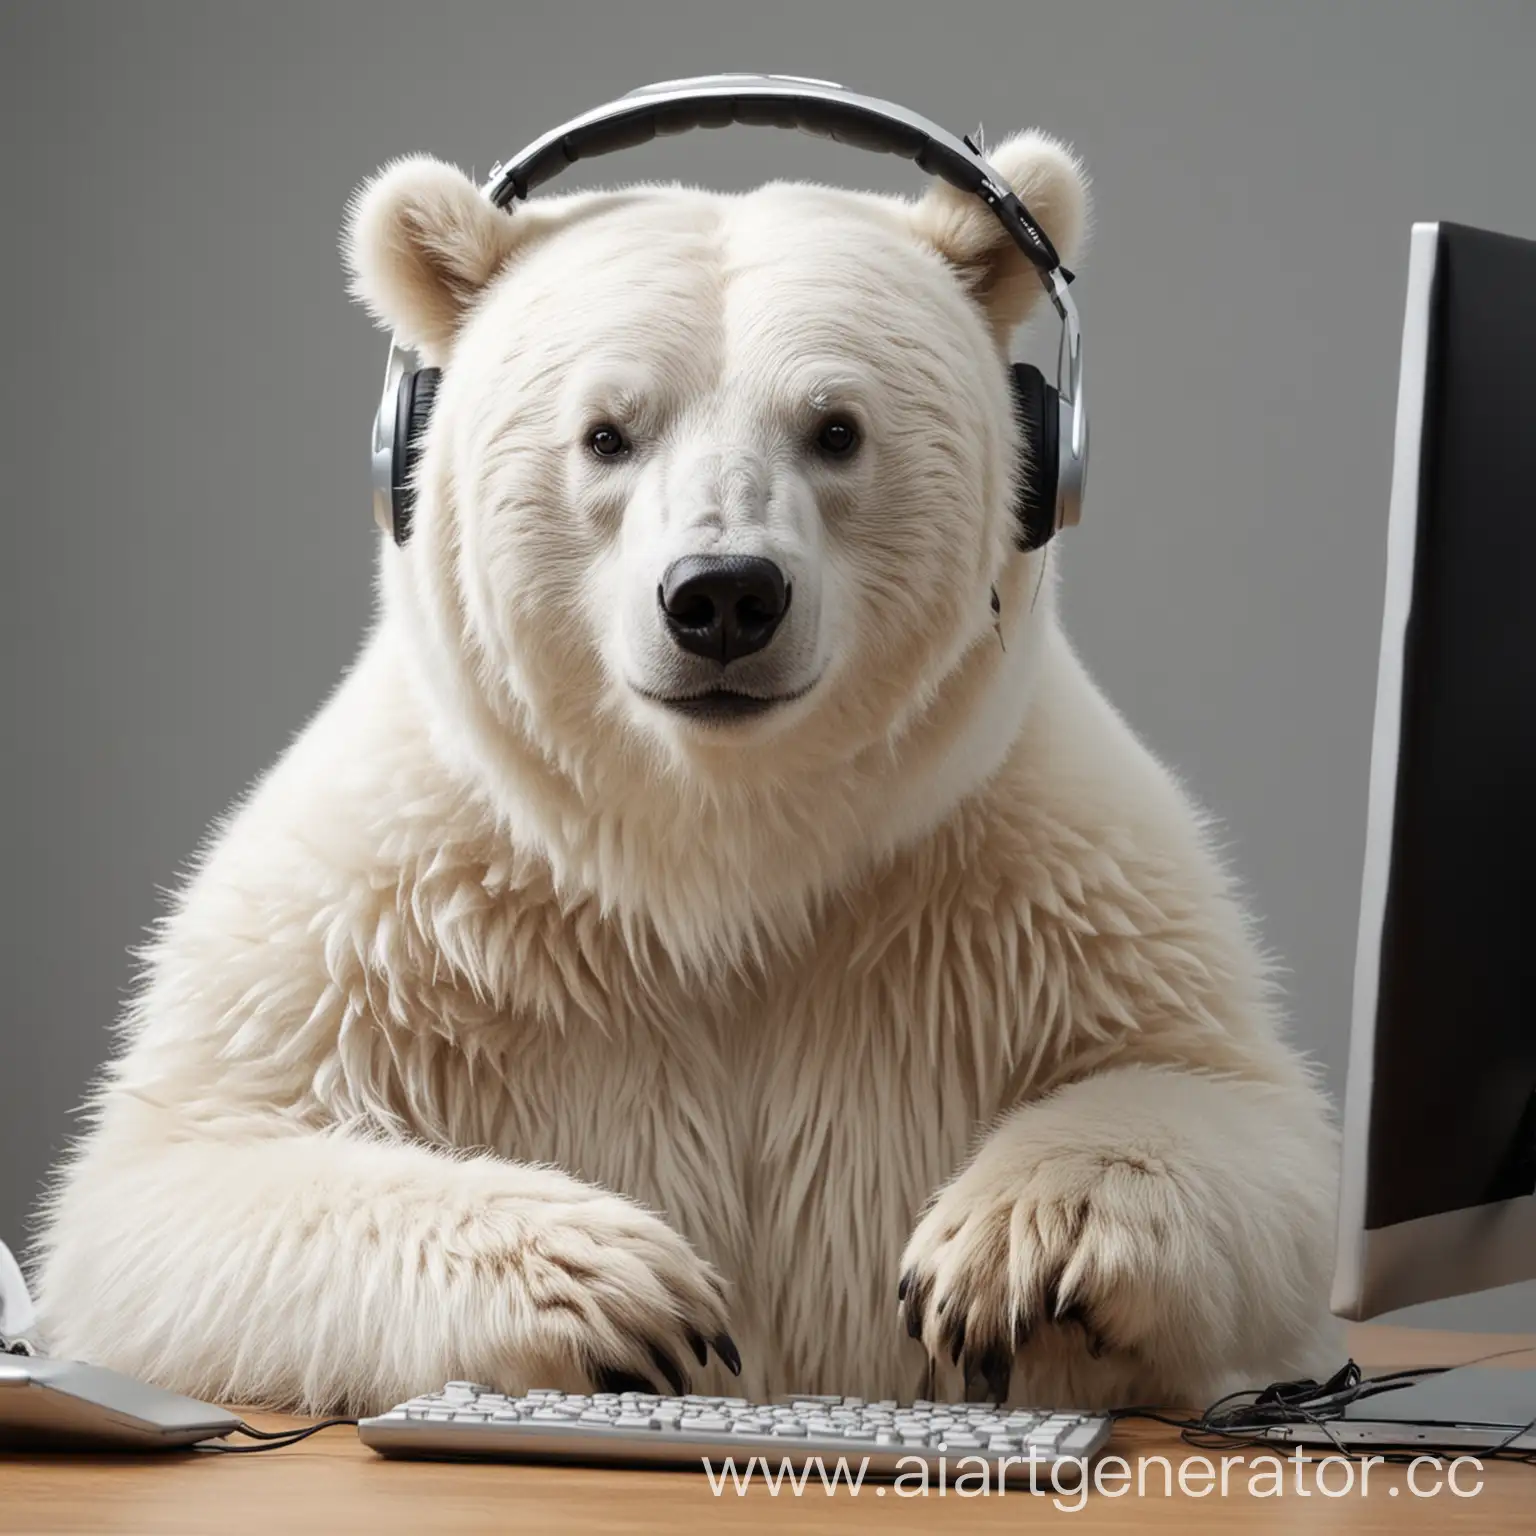 Polar-Bear-Enjoying-Digital-Entertainment-with-Headphones